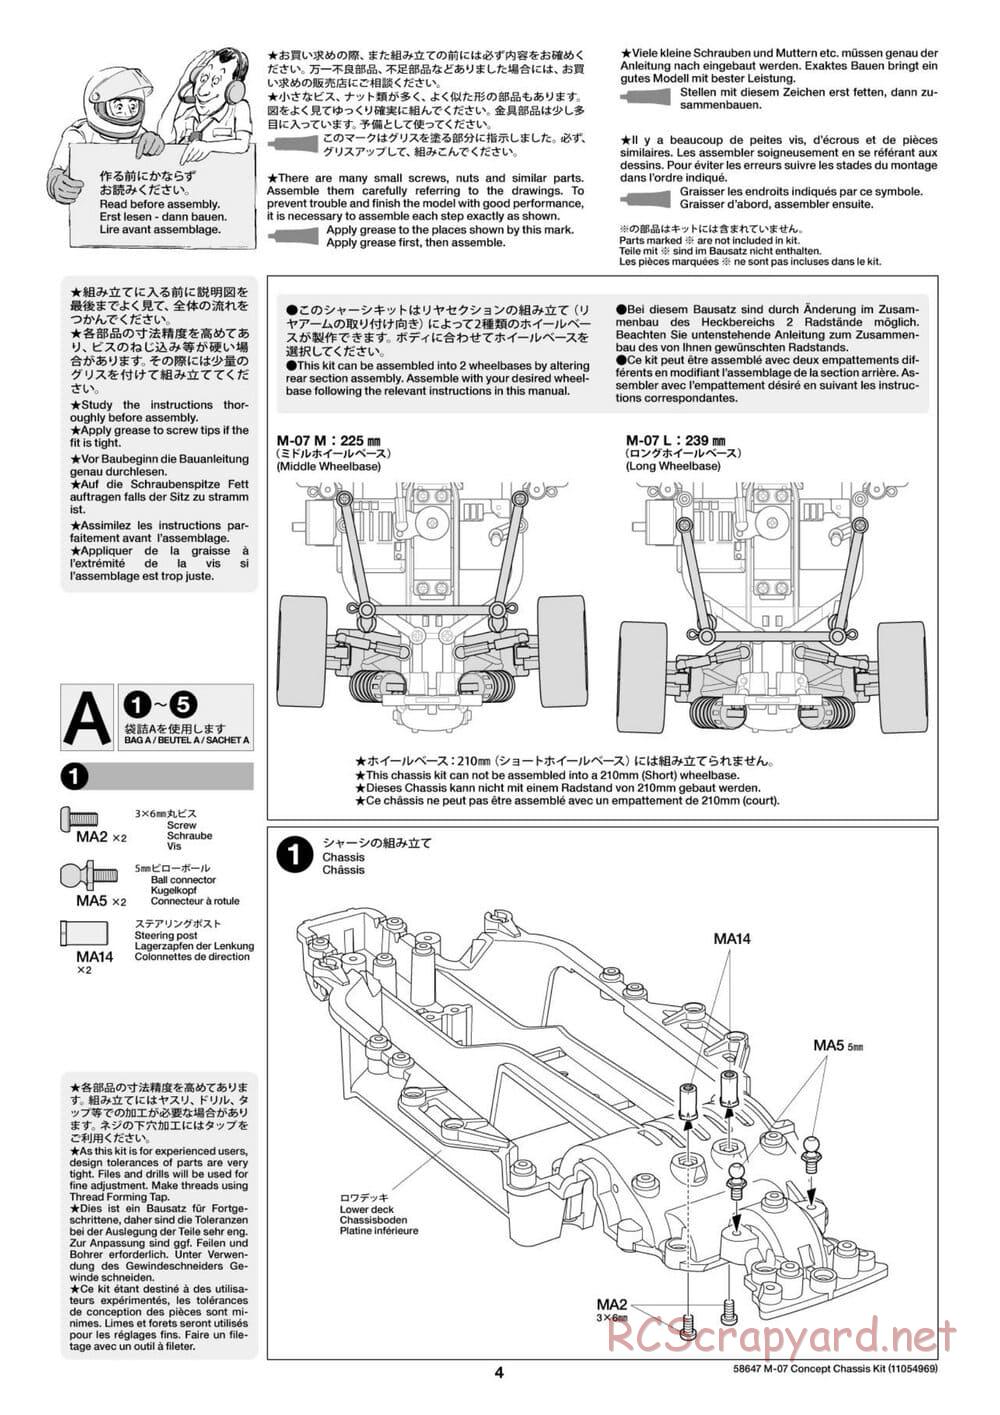 Tamiya - M-07 Concept Chassis - Manual - Page 4